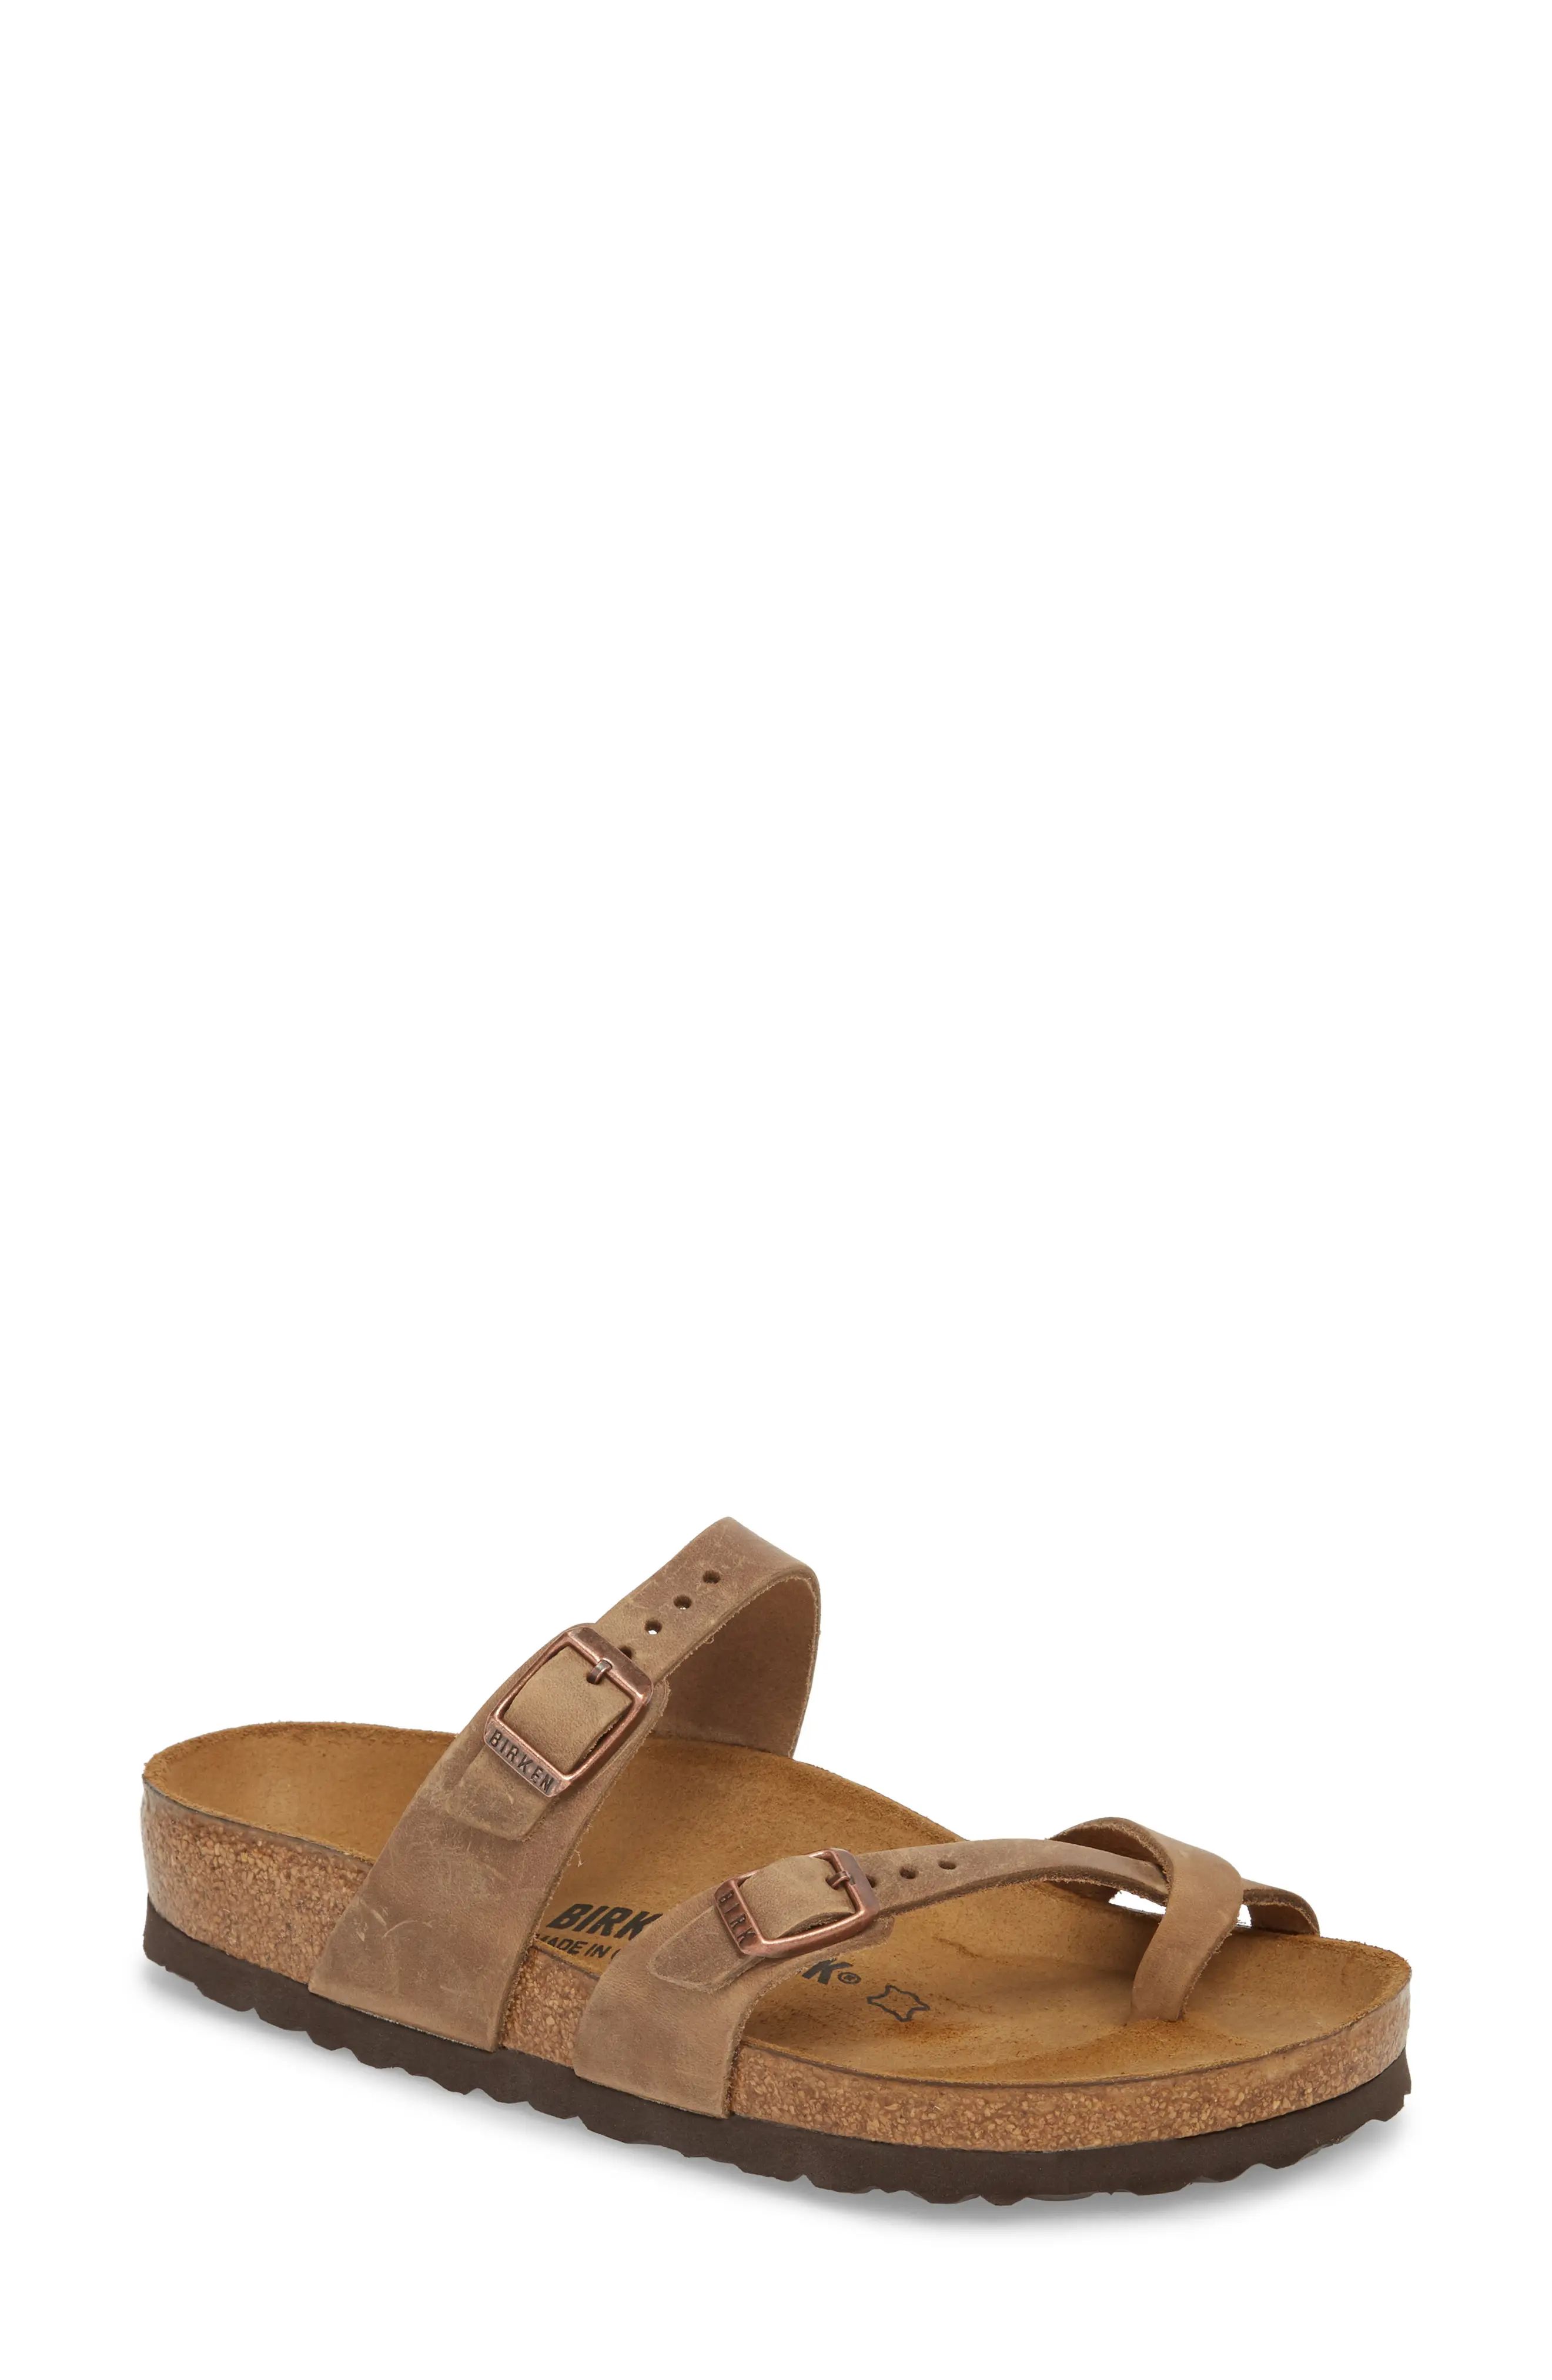 Women's Birkenstock Mayari Slide Sandal, Size 7-7.5US - Brown | Nordstrom